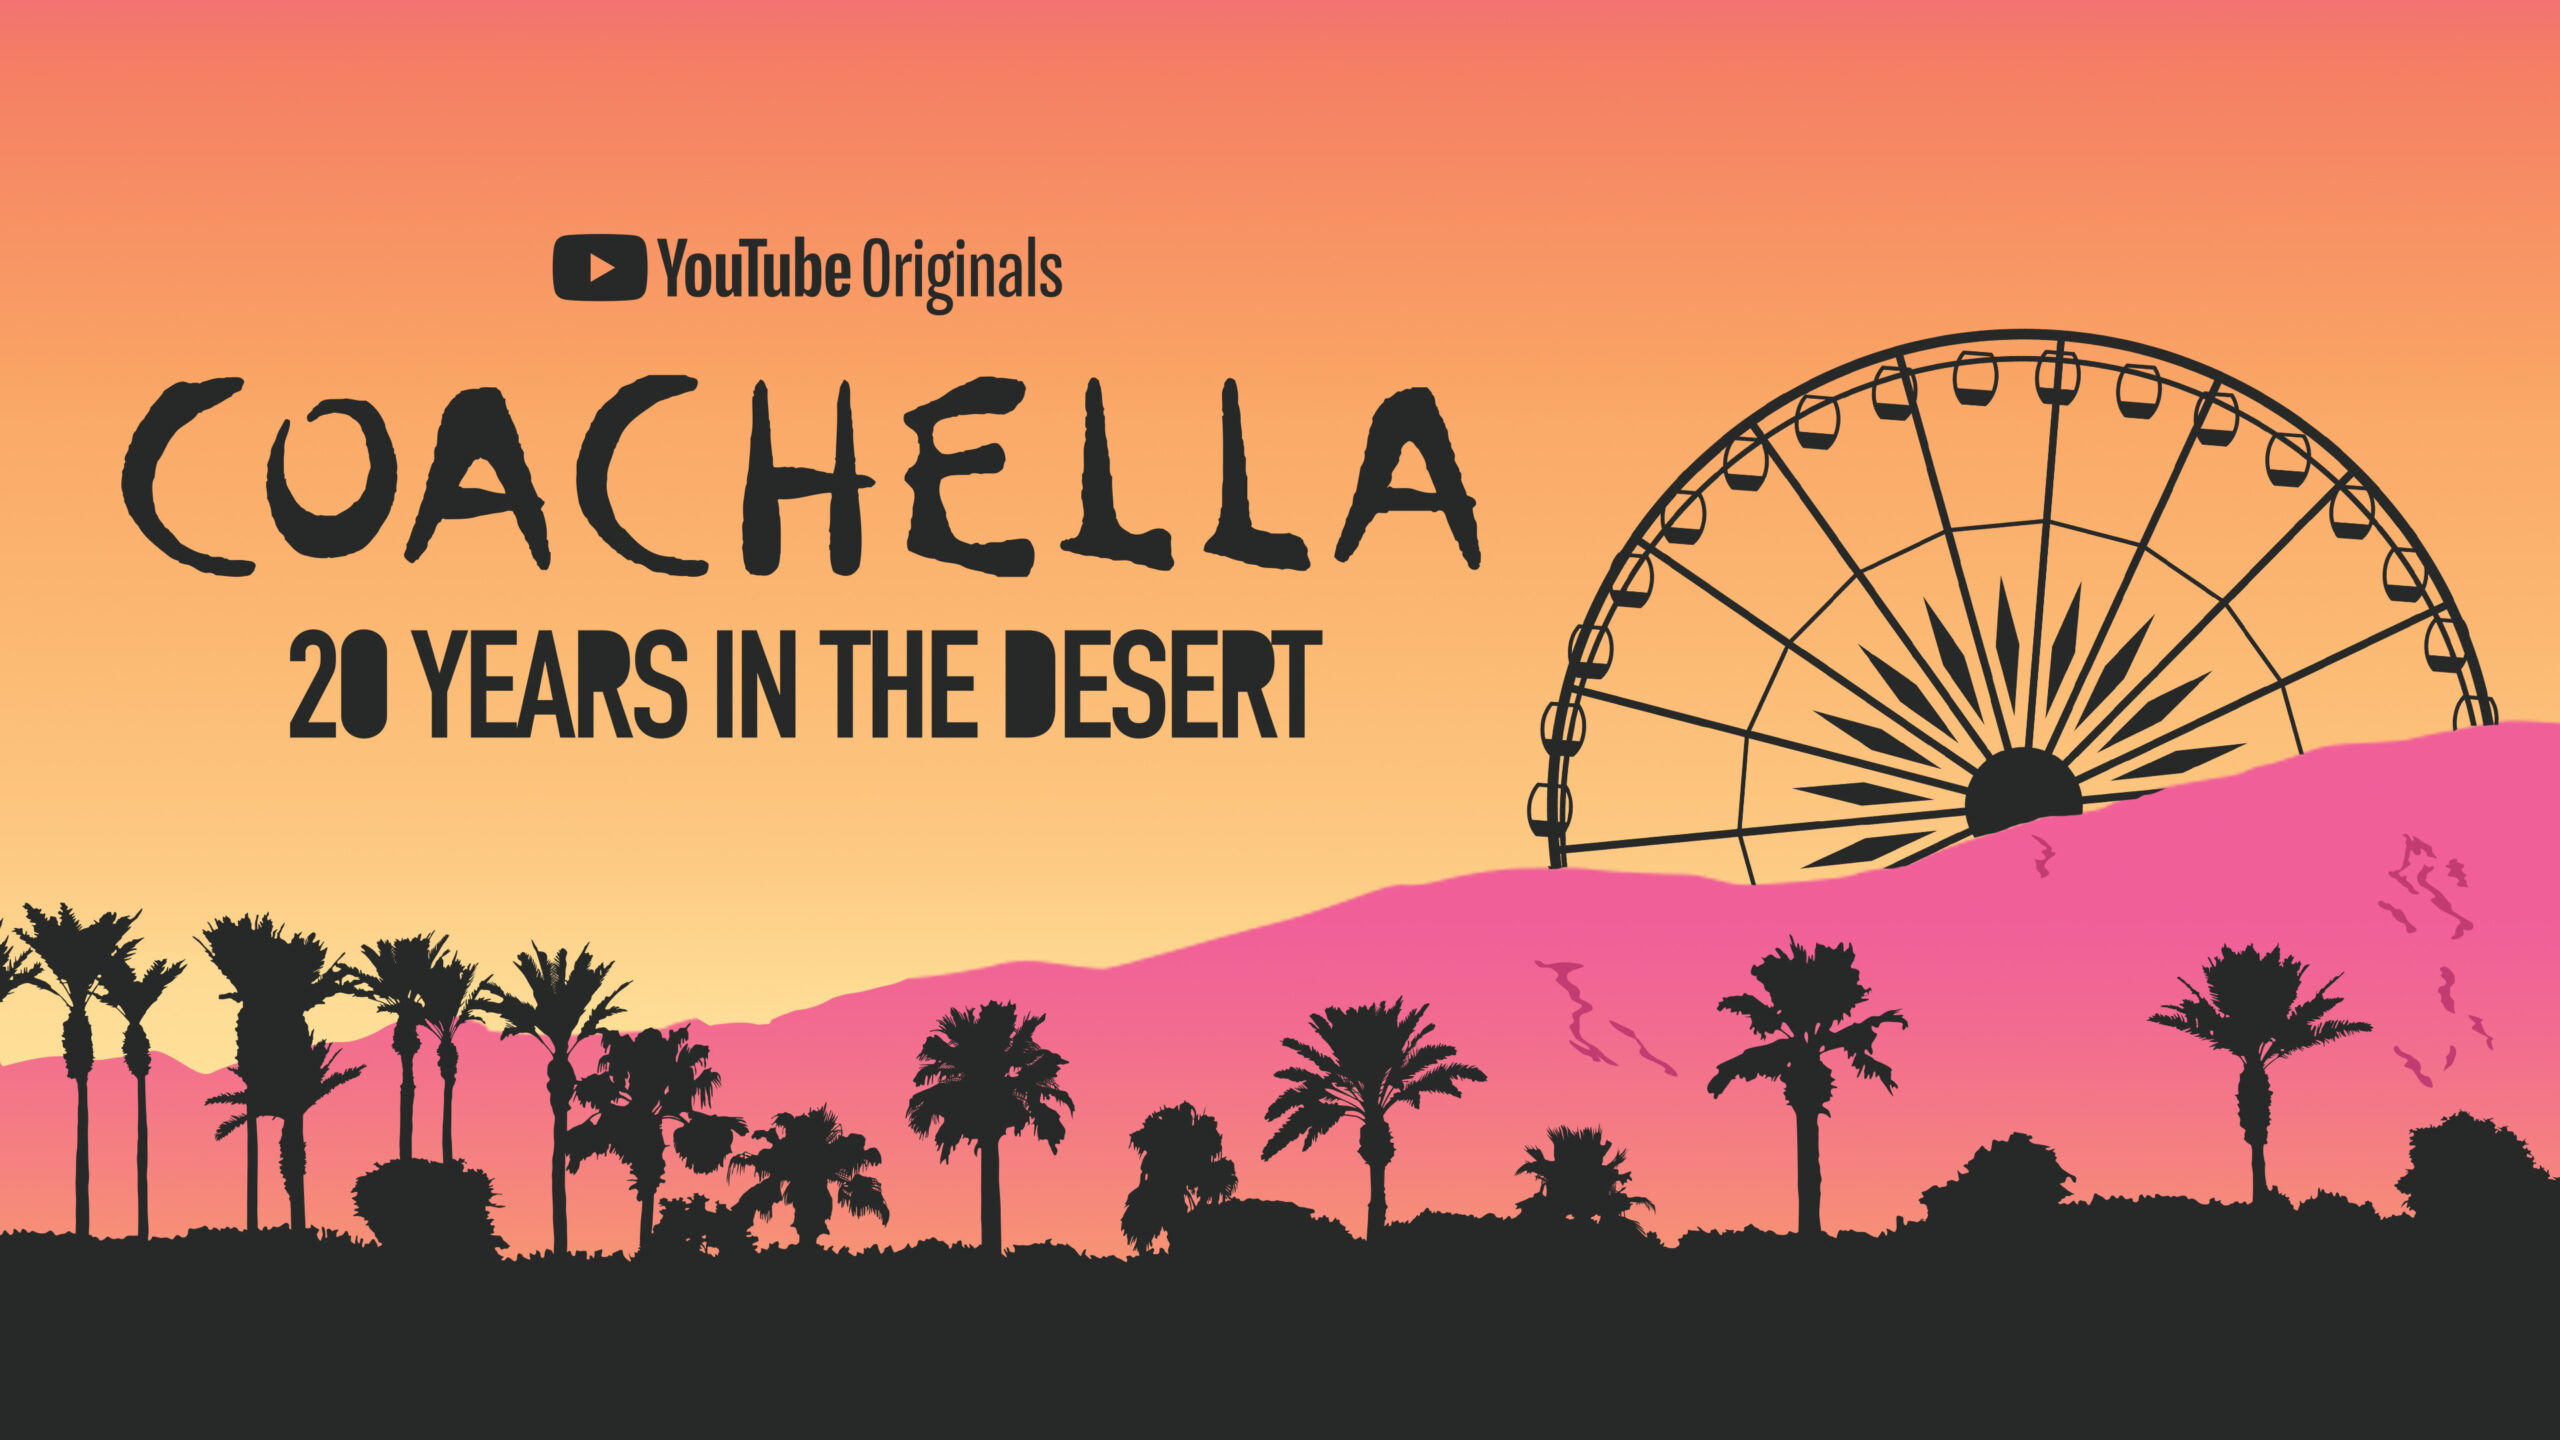 Coachella: 20 Years in the Desert image. Photo by YouTube / Google